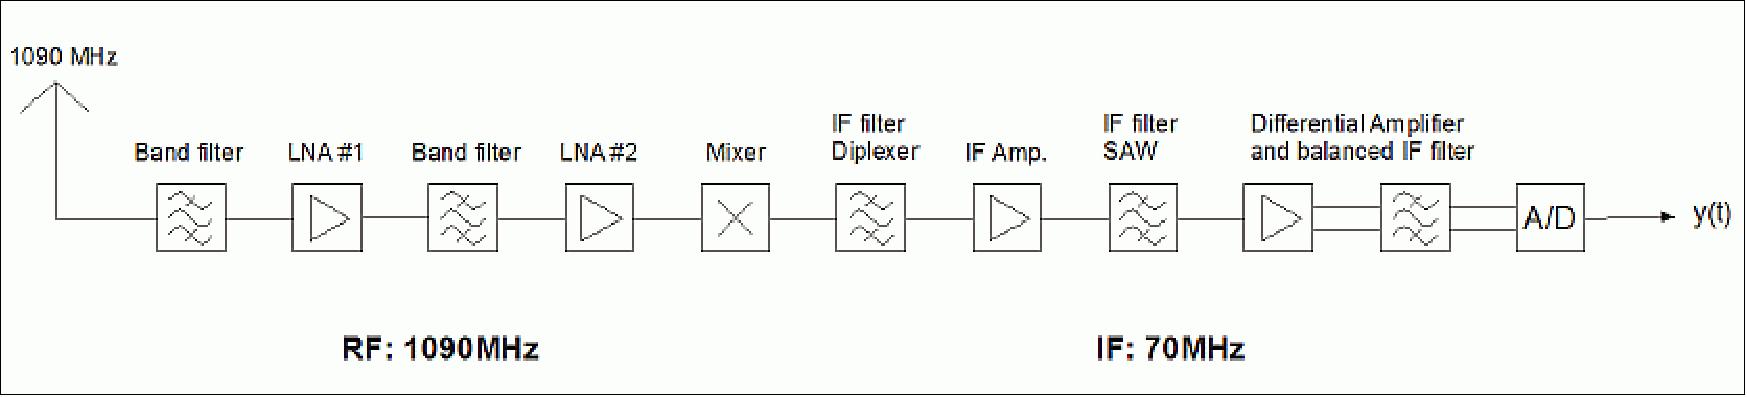 Figure 86: Single superheterodyne receiver concept (image credit: DLR, Ref. 79)